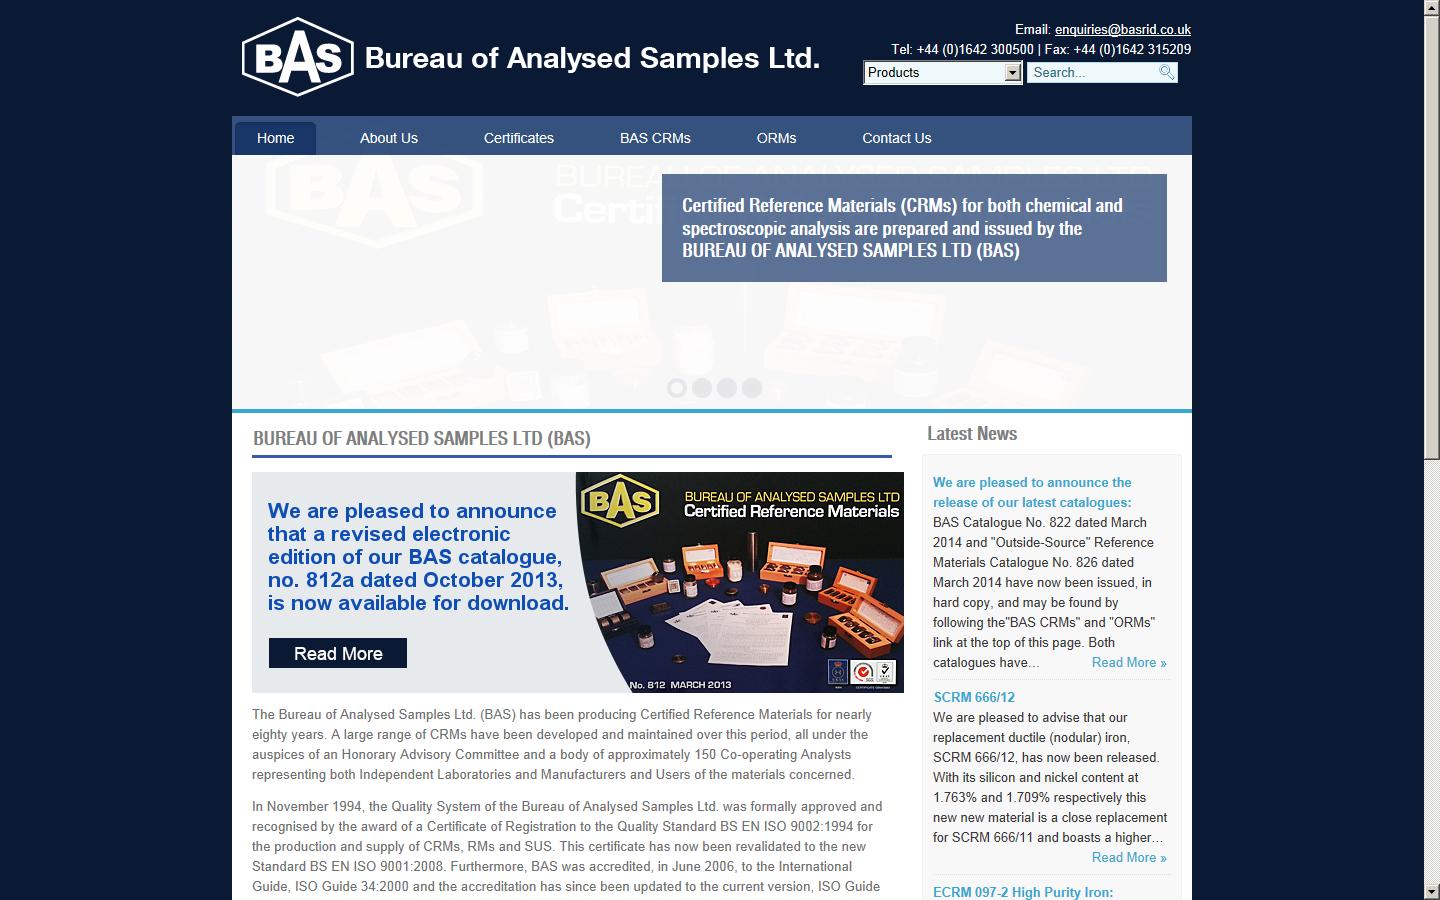 Ridsdale & Co Ltd and Bureau of Analysed Samples Ltd